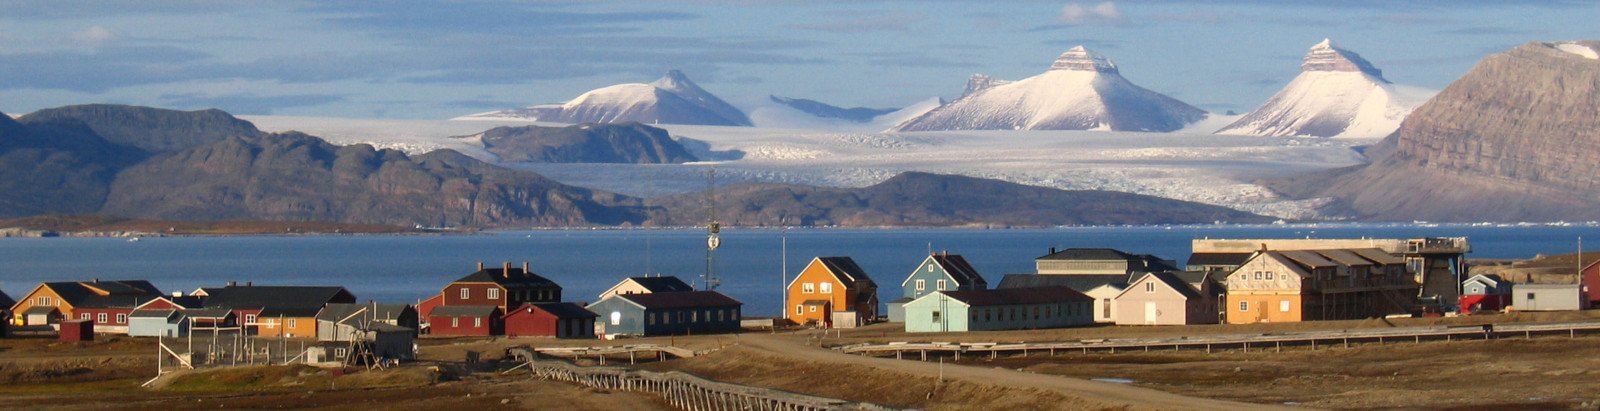 Ny Alesund - Spitsbergen reizen